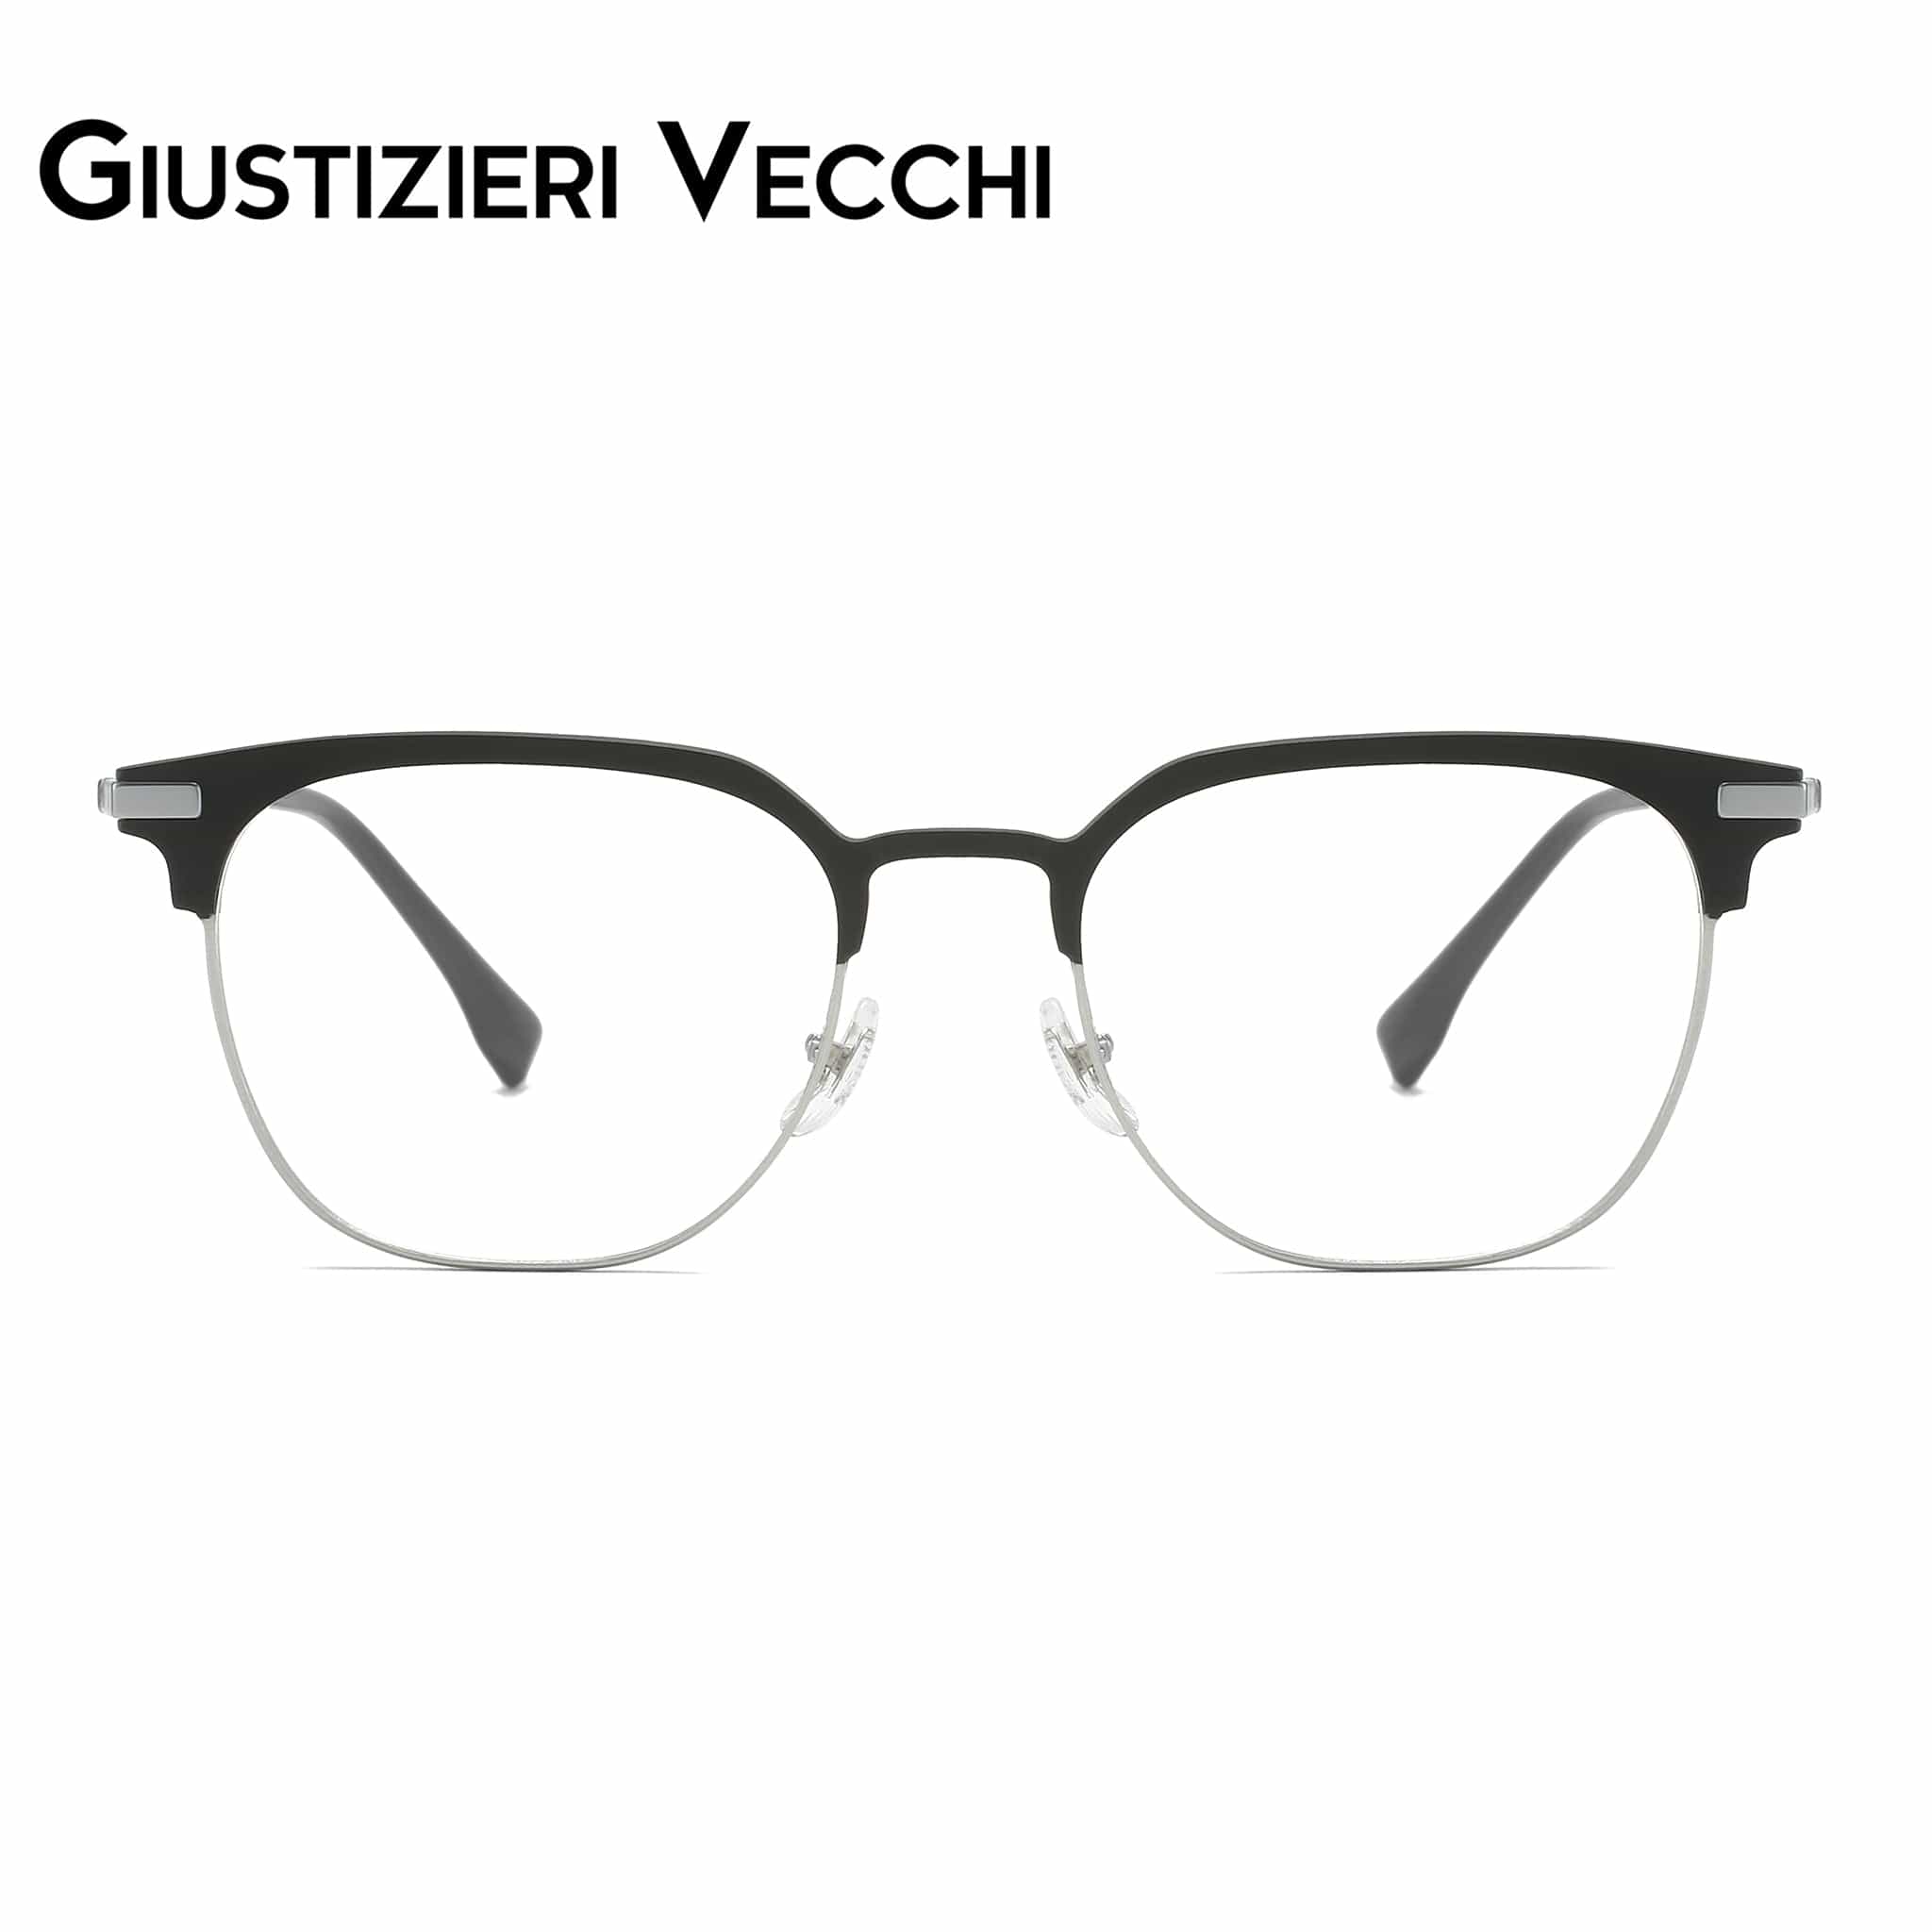 GIUSTIZIERI VECCHI Eyeglasses Small / Black with Silver MindHaze Uno